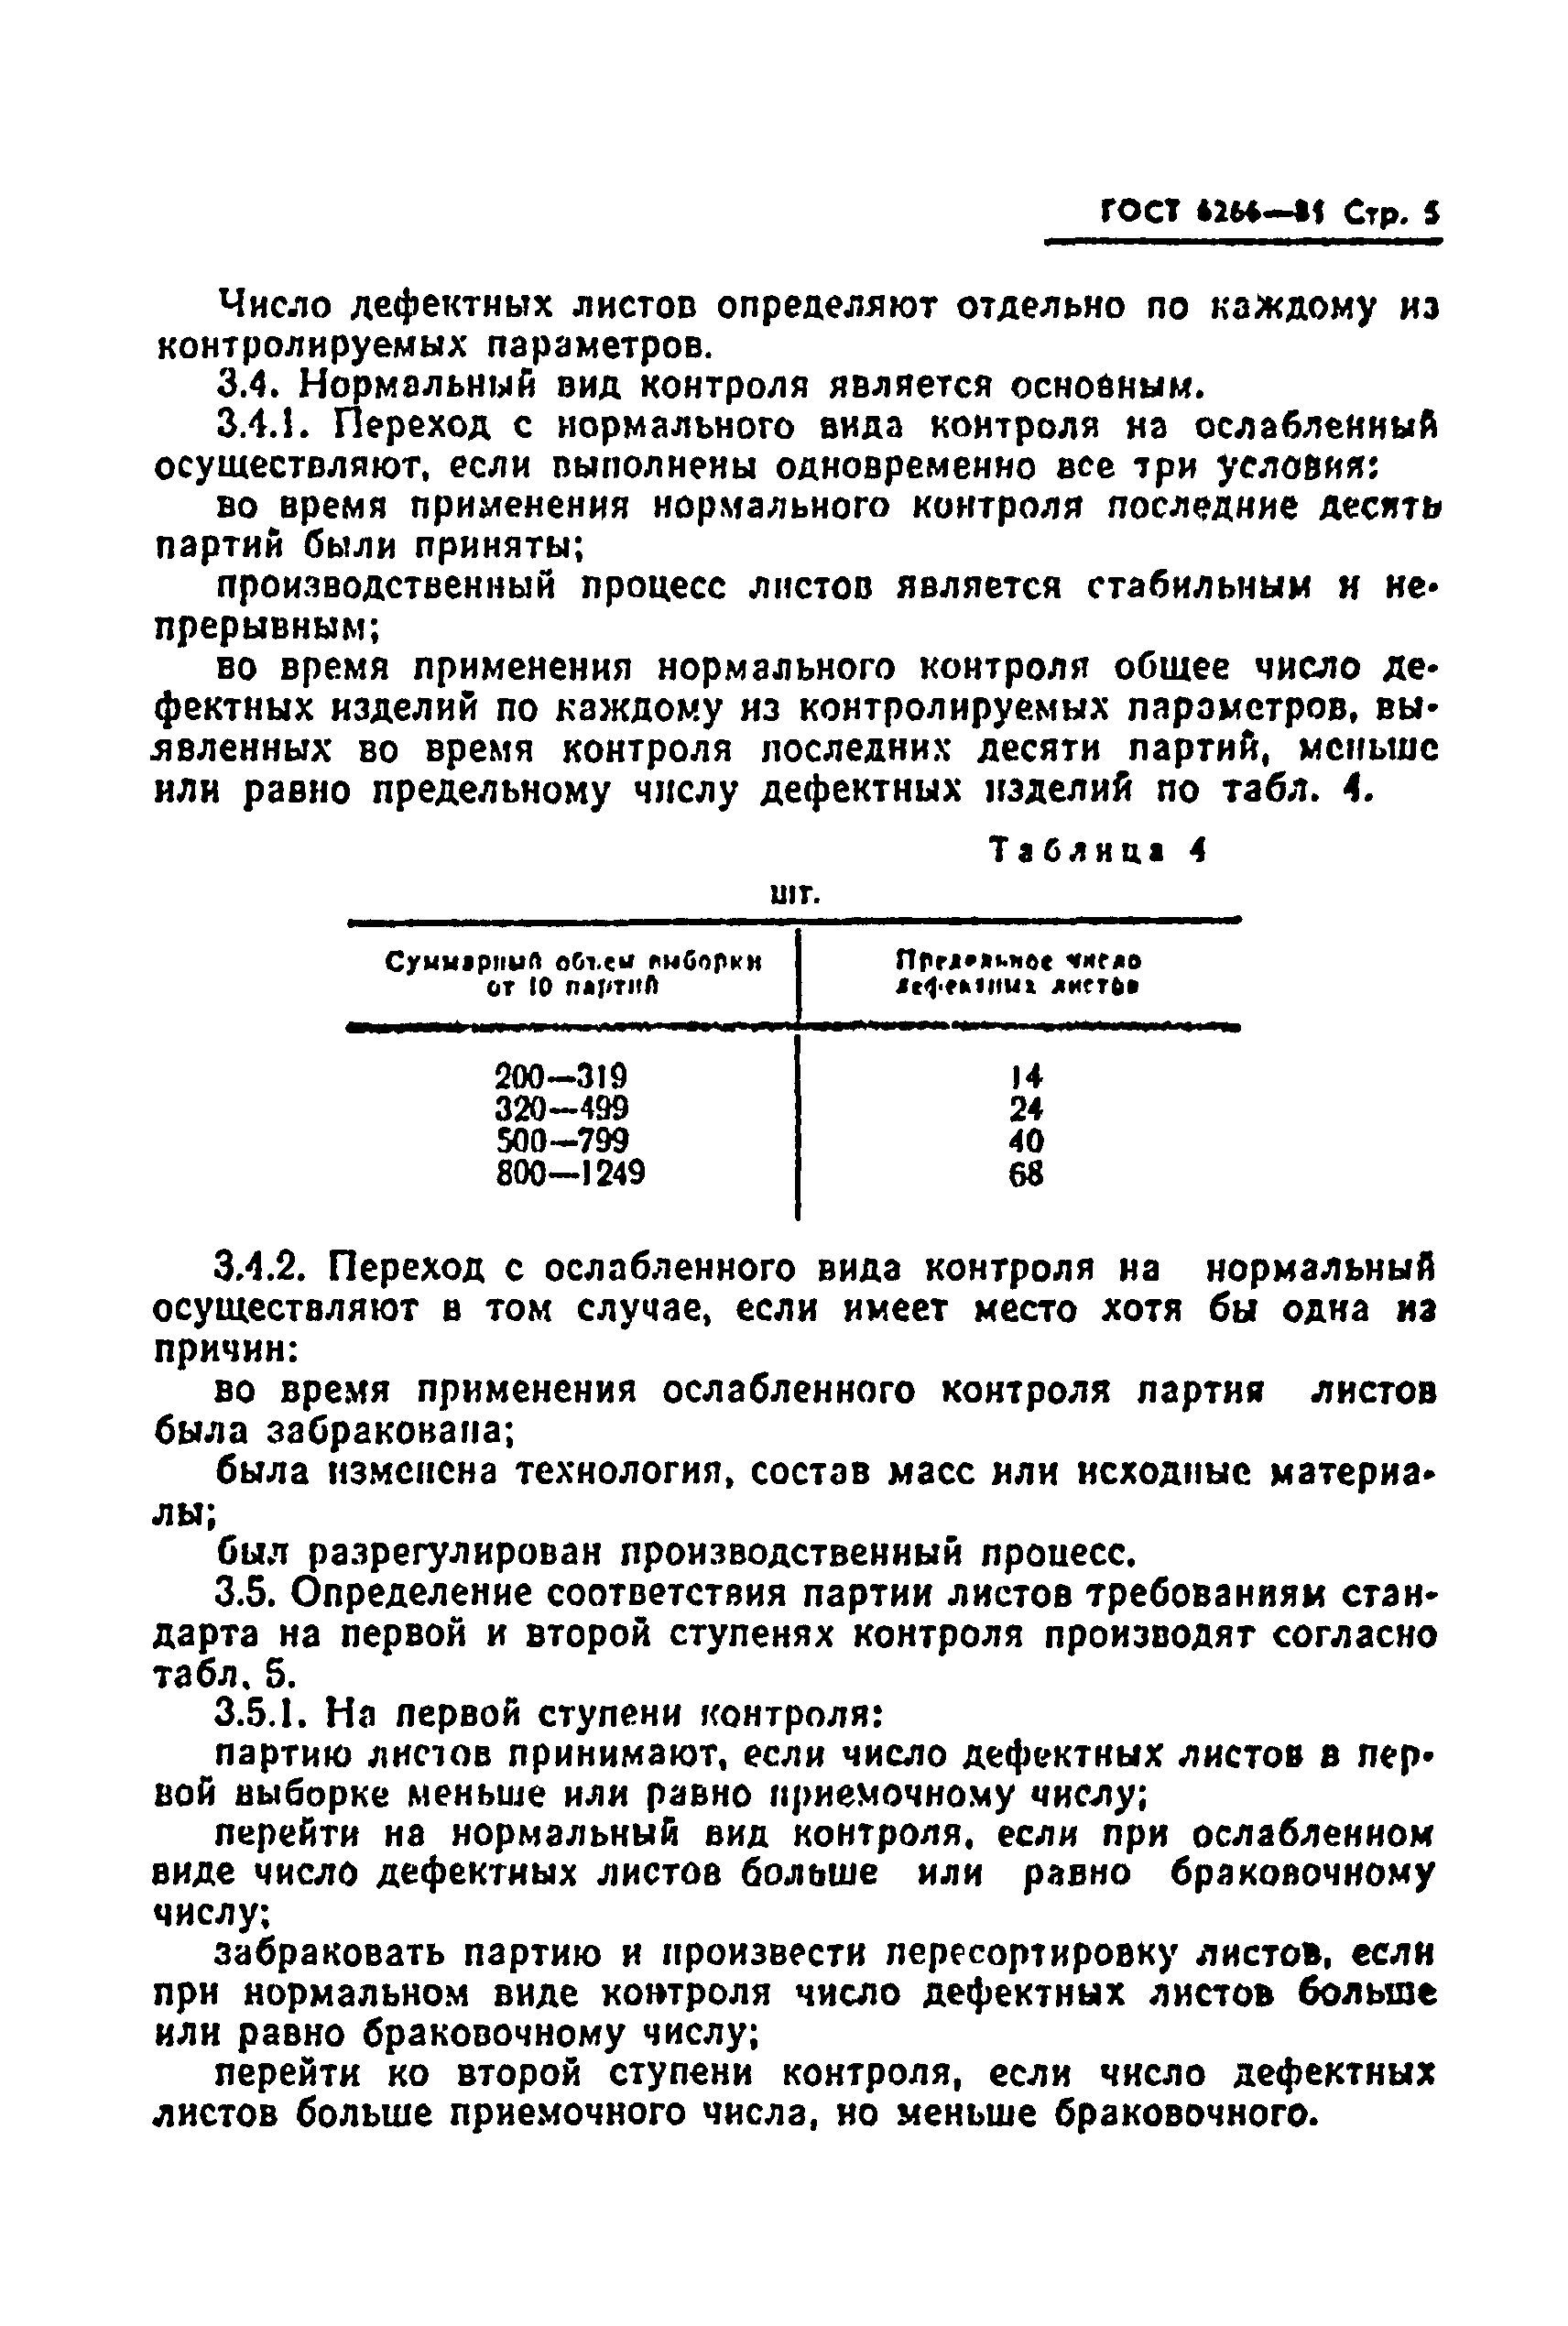 ГОСТ 6266-81